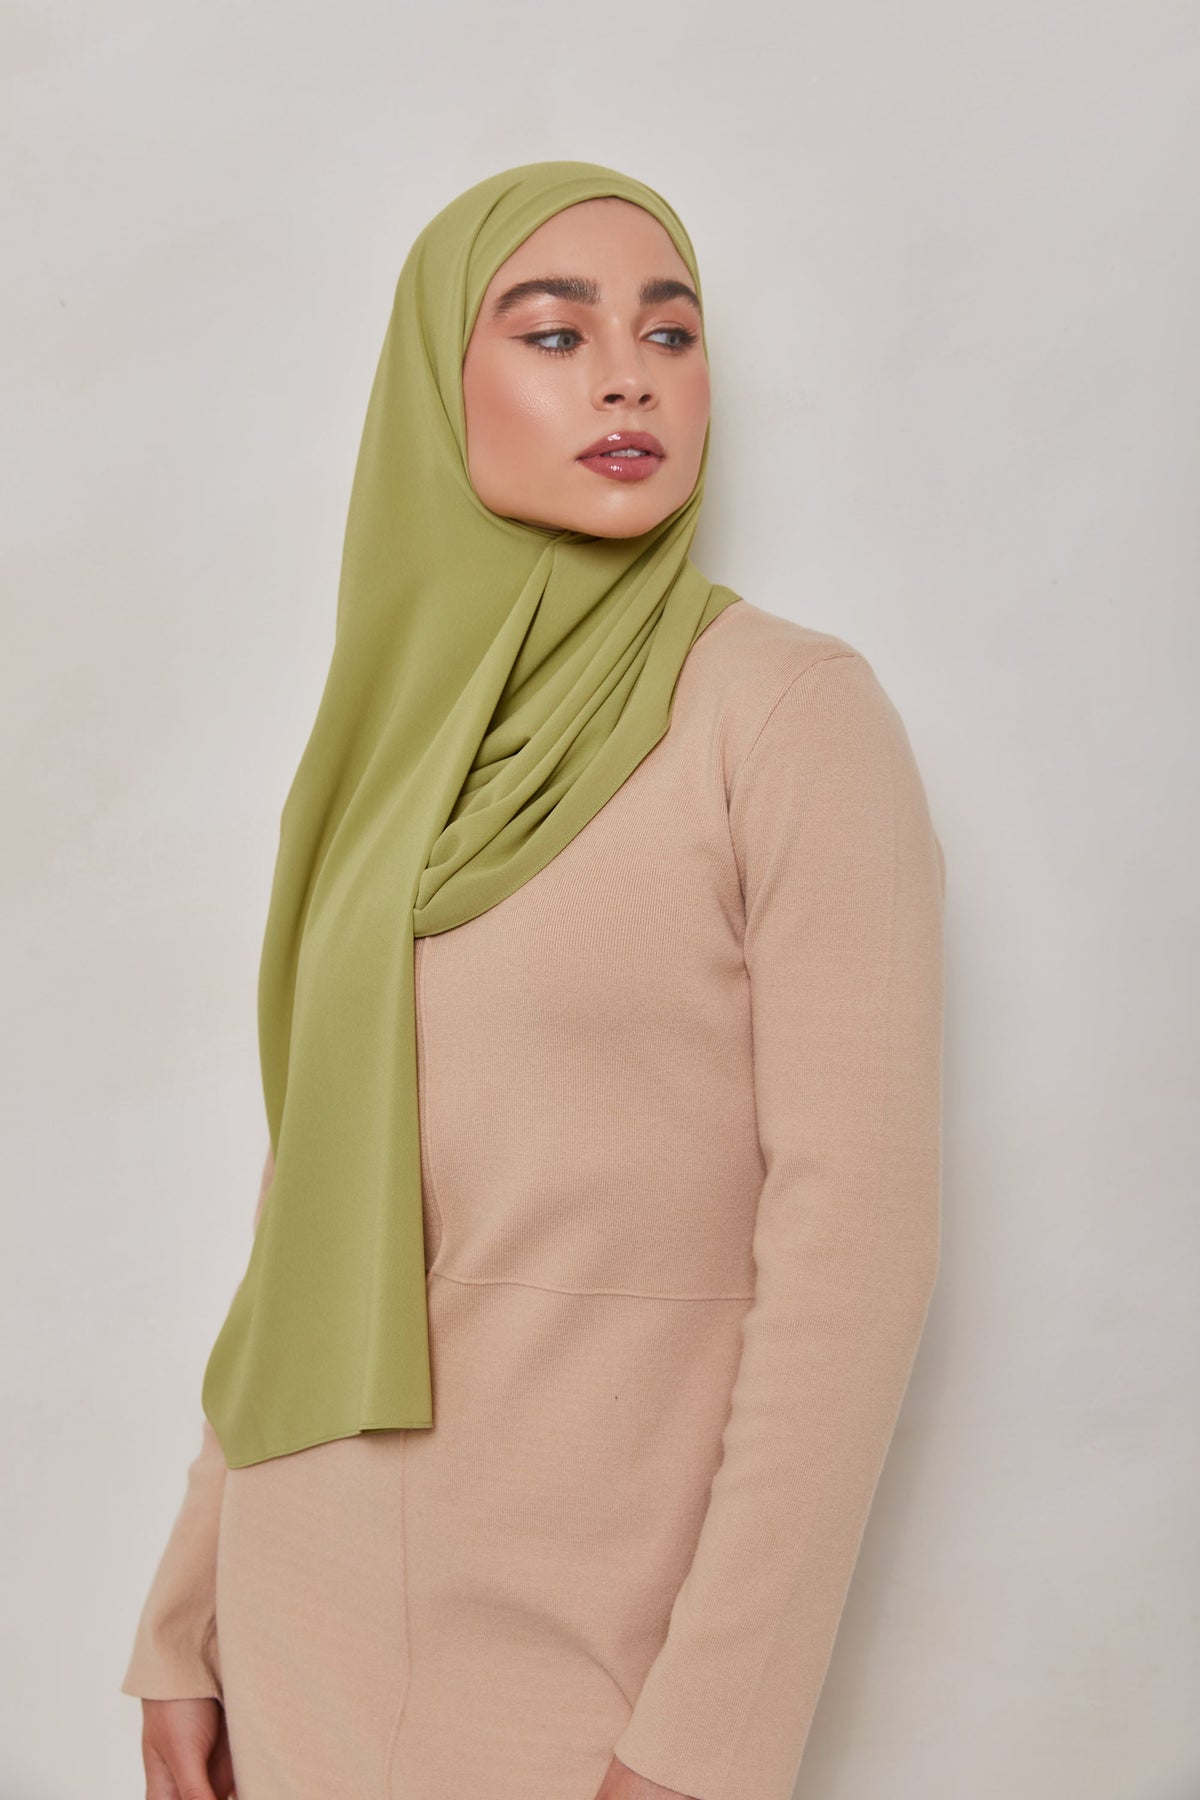 TEXTURE Everyday Chiffon Hijab - Cypress Green (Algae) Veiled Collection 